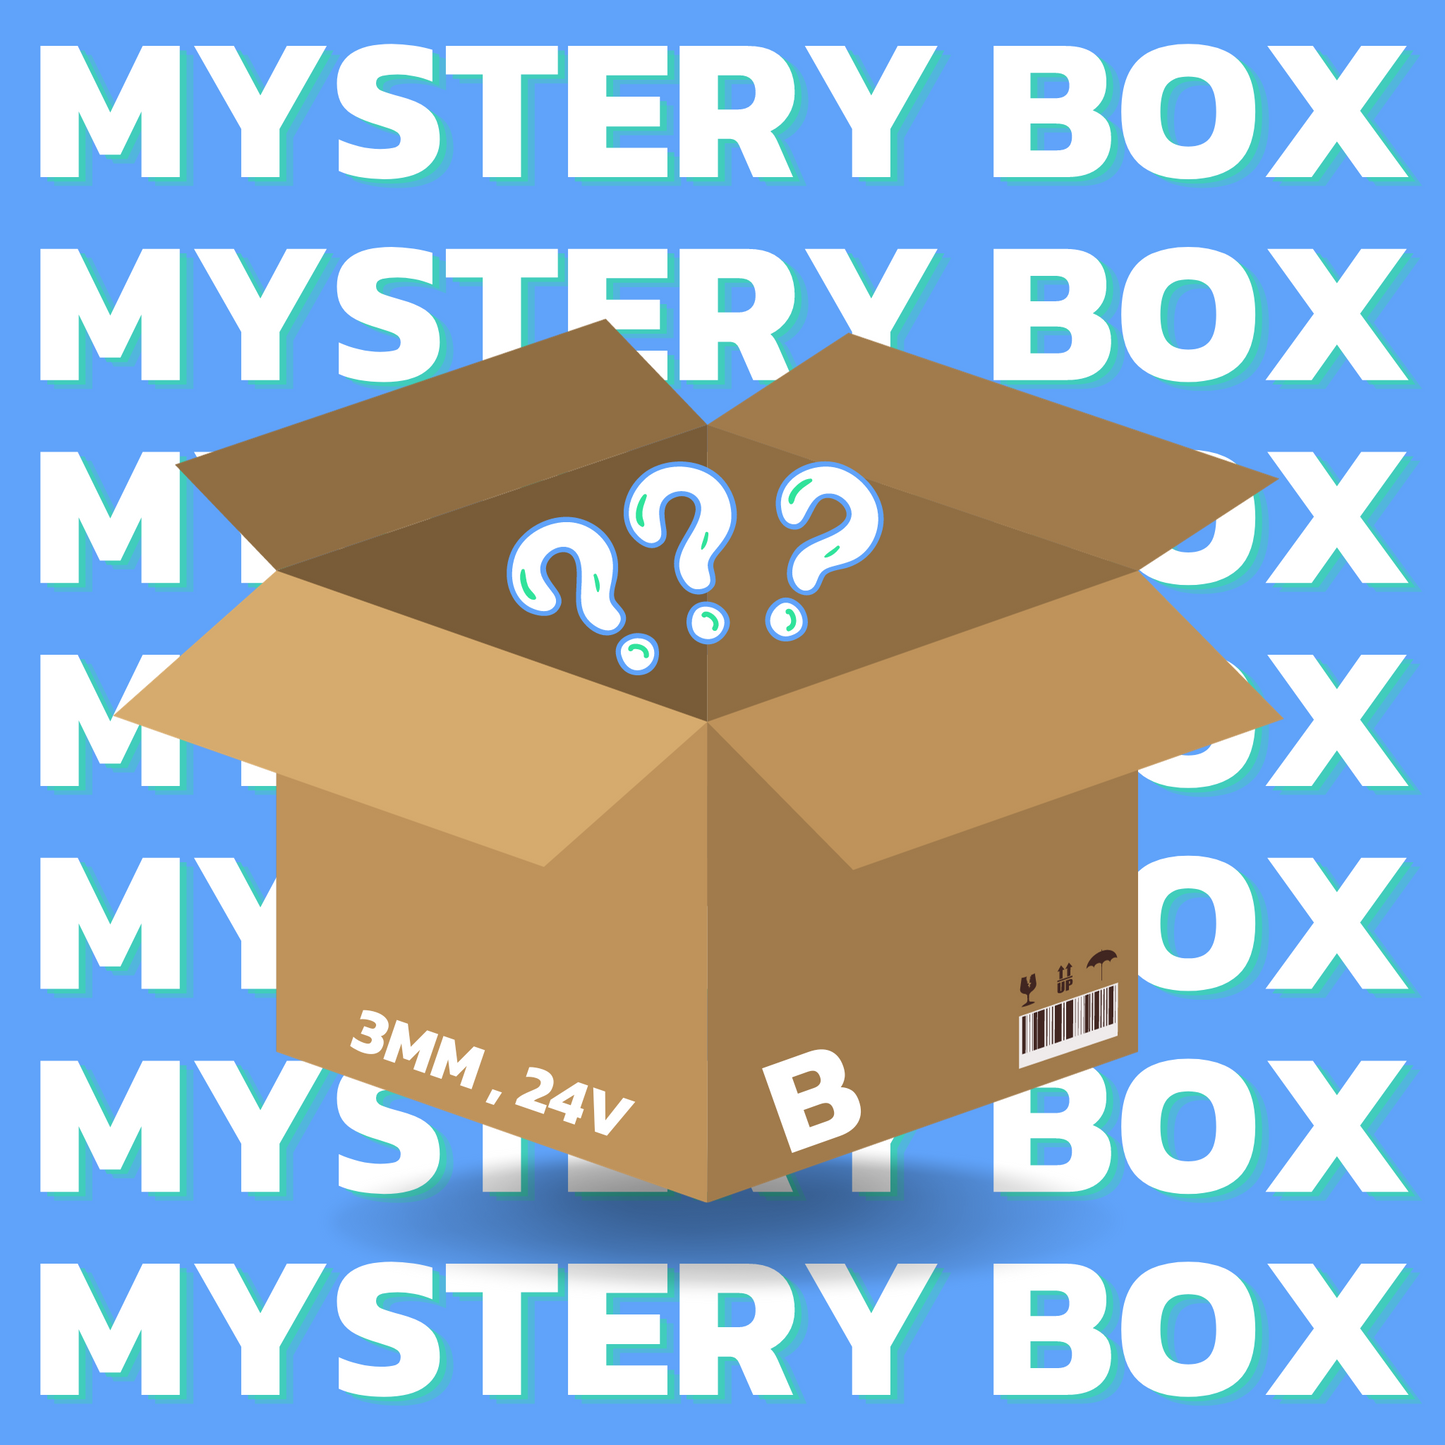 E3D Mystery Boxes